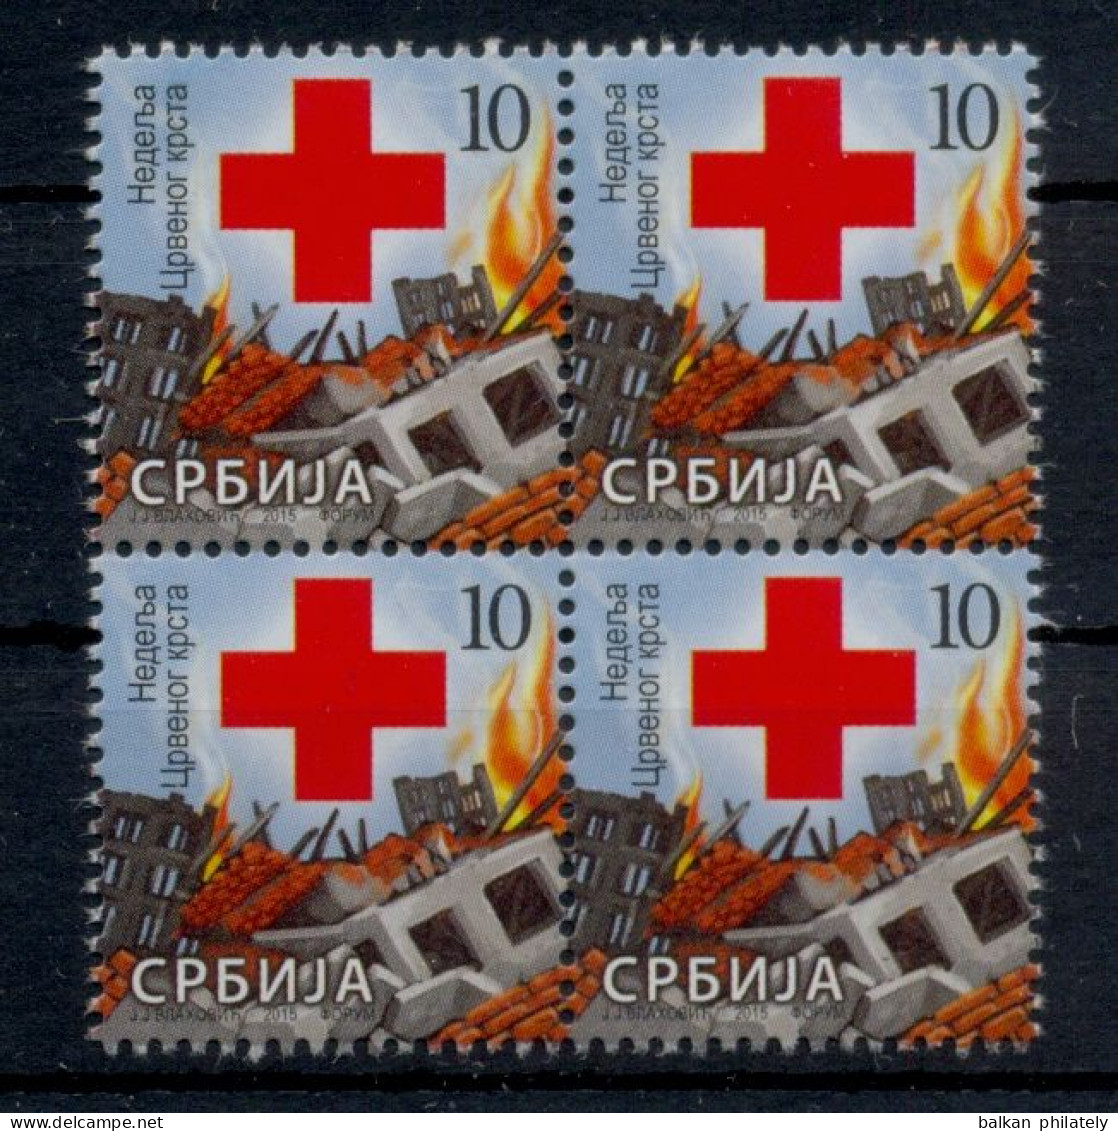 Serbia 2015 Red Cross Week Croix Rouge Rotes Kreuz Cruz Roja Croce Rossa Tax Charity Surcharge MNH - Servië